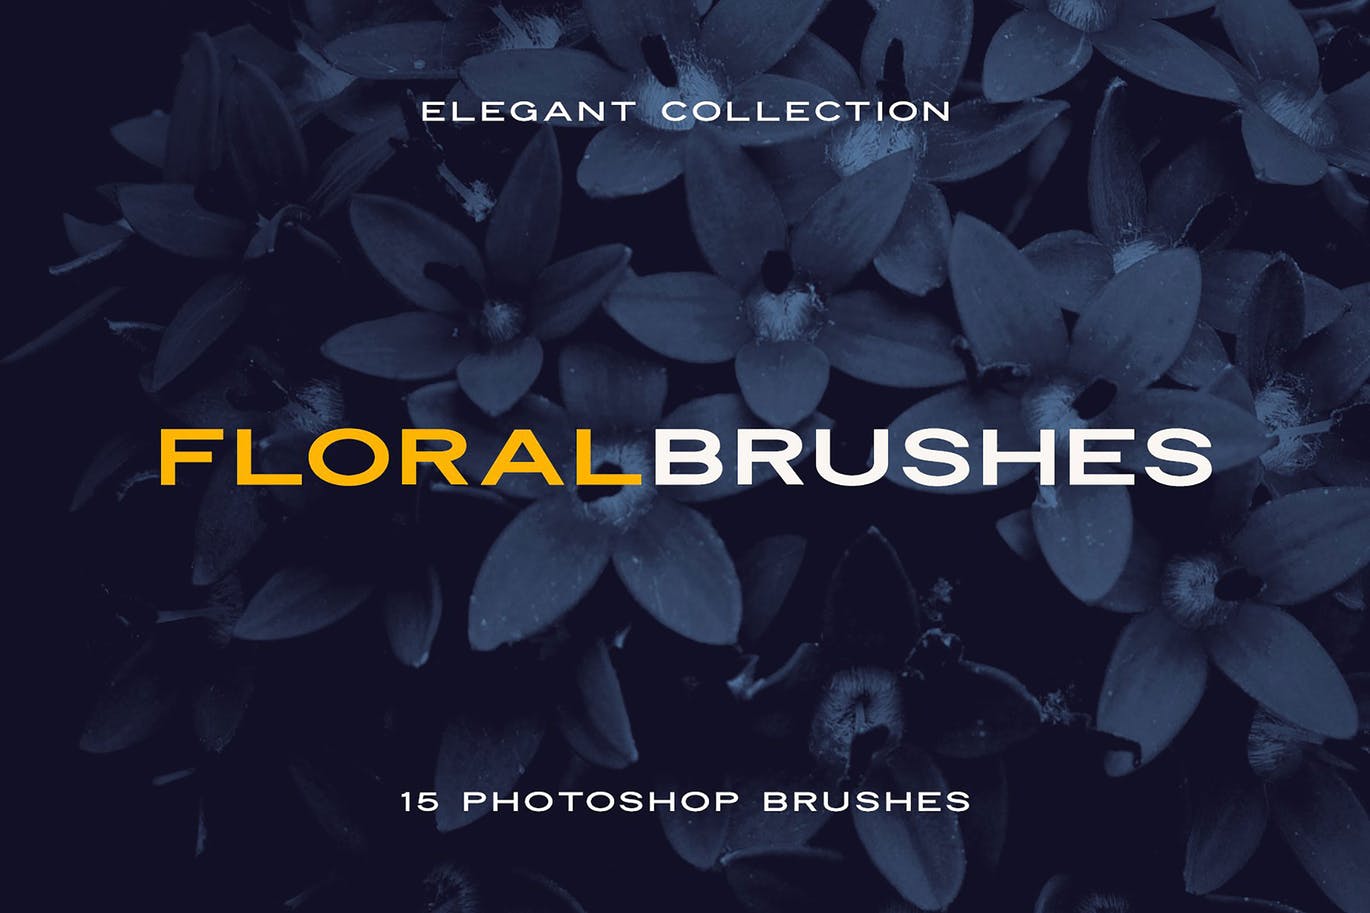 An elegant floral brushes for photoshop